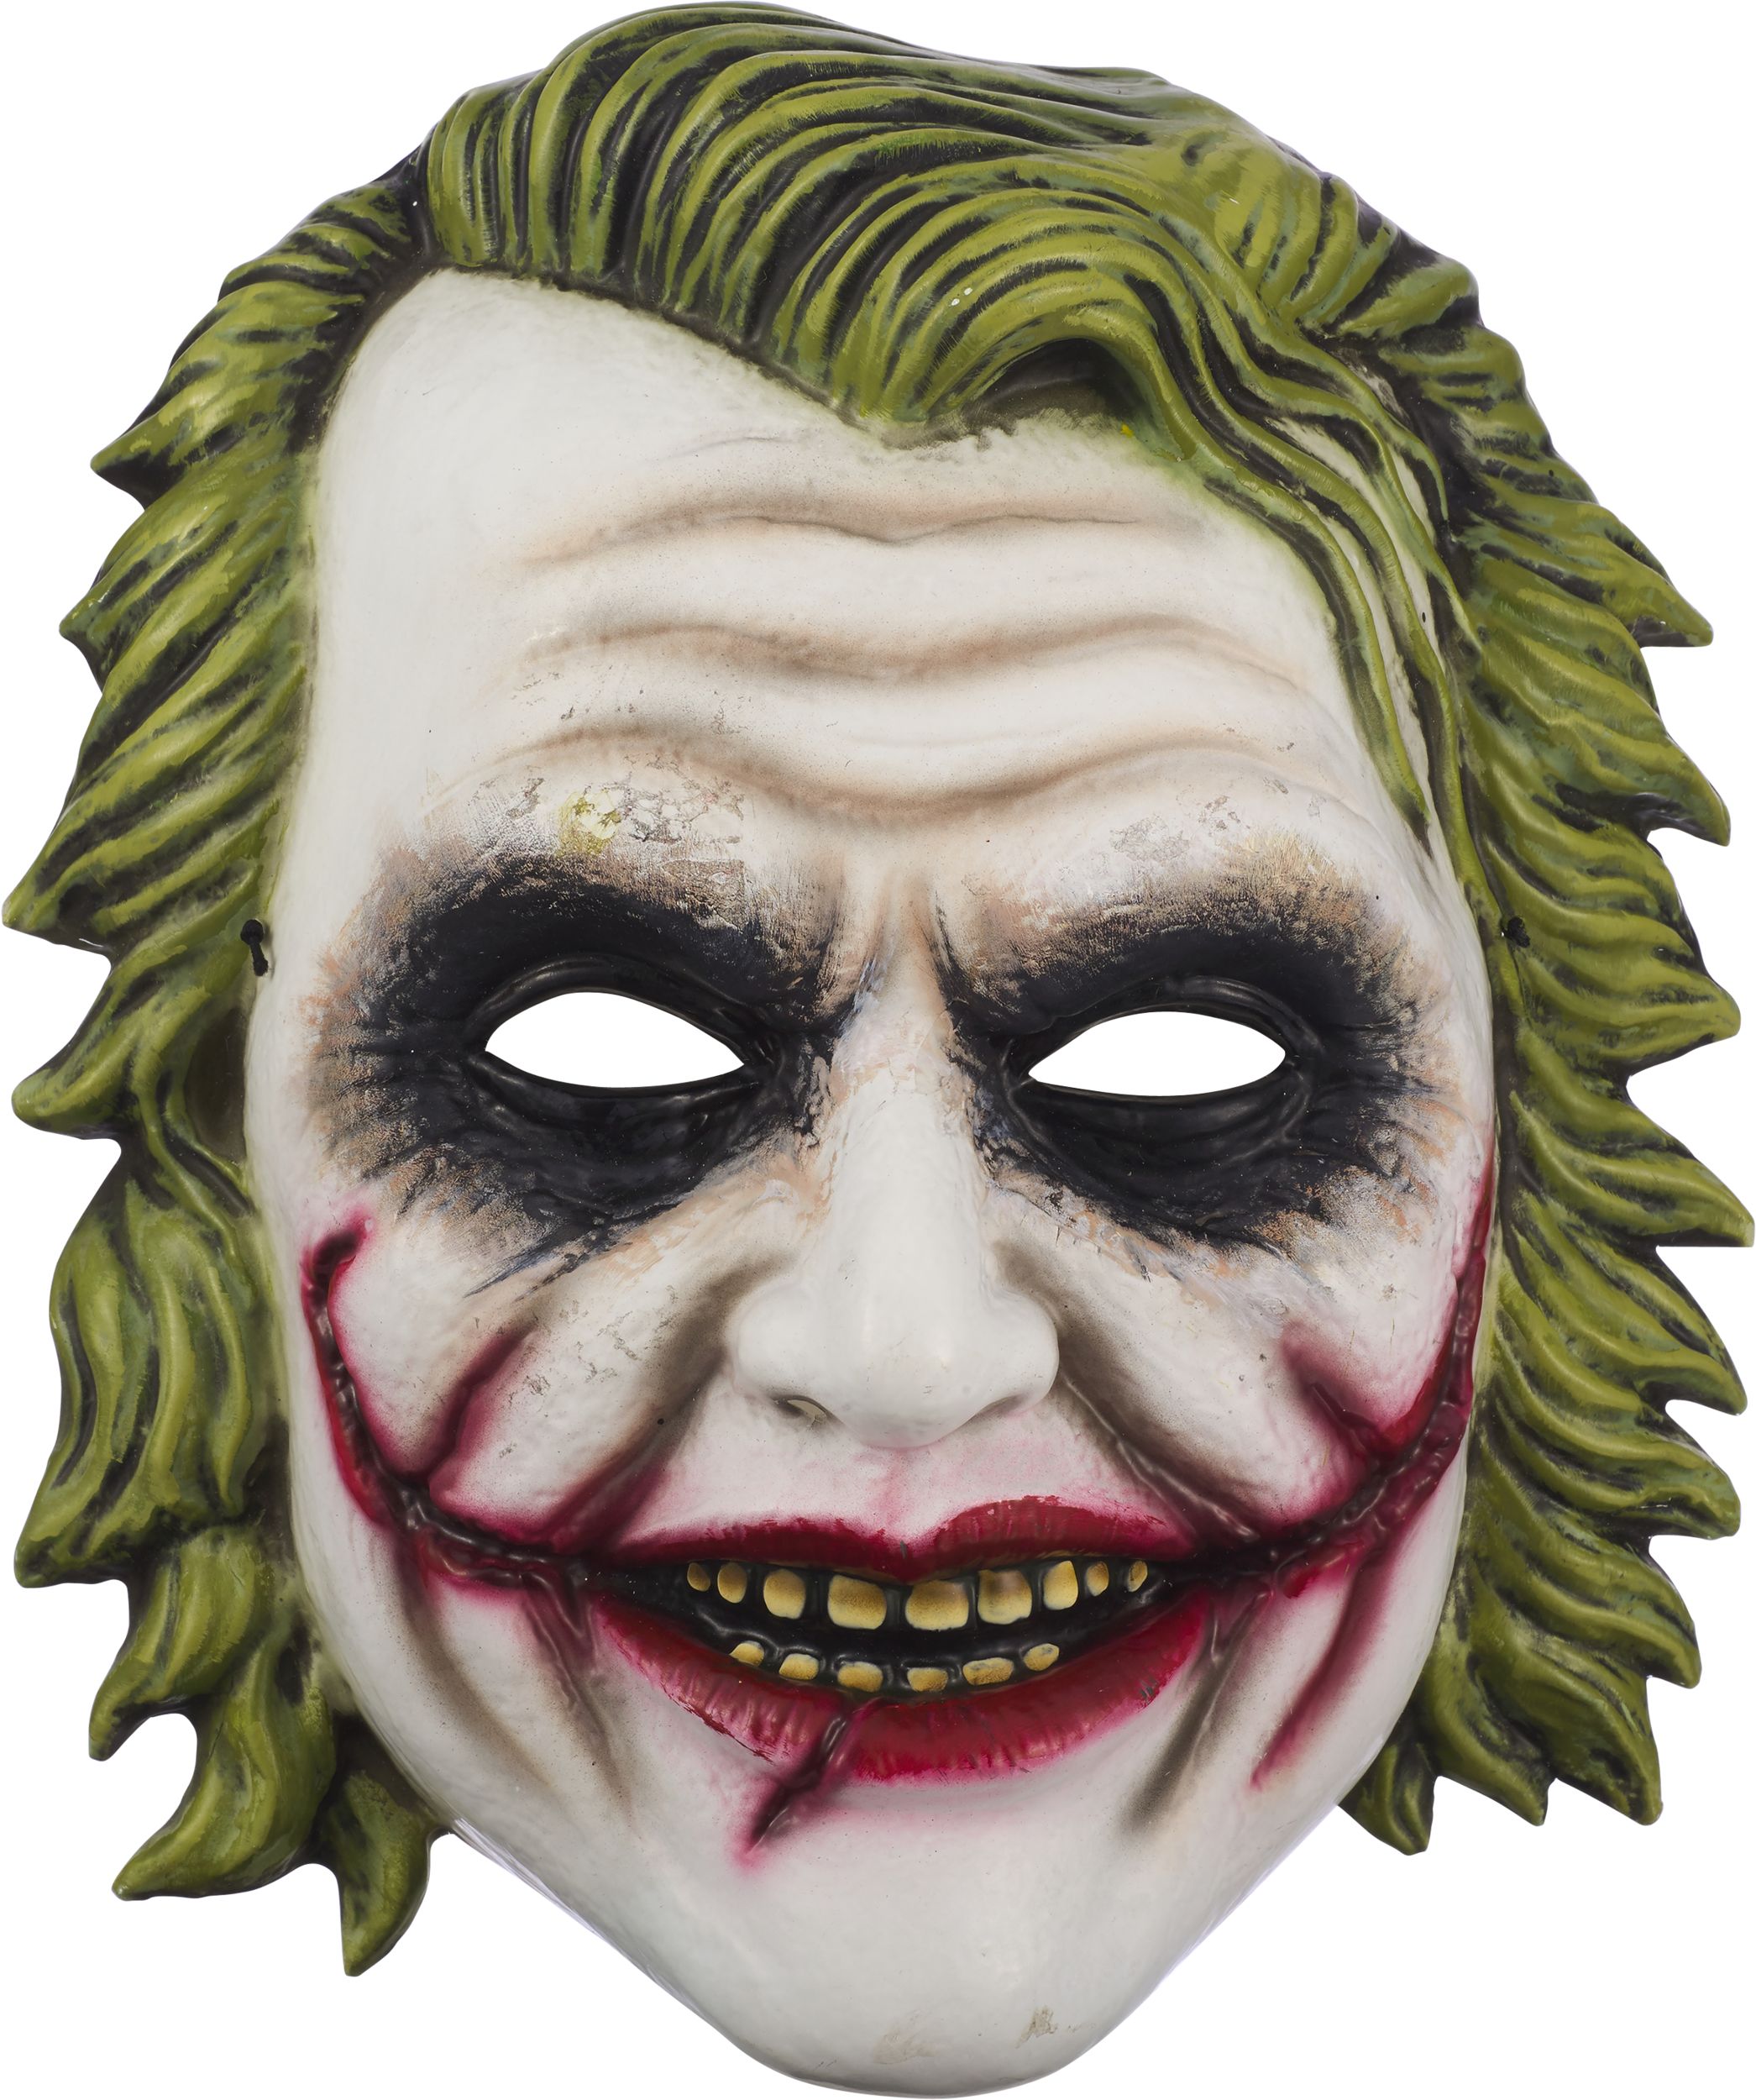 DC The Dark Knight Joker Plastic Mask, Green/White, One Size, Wearable ...